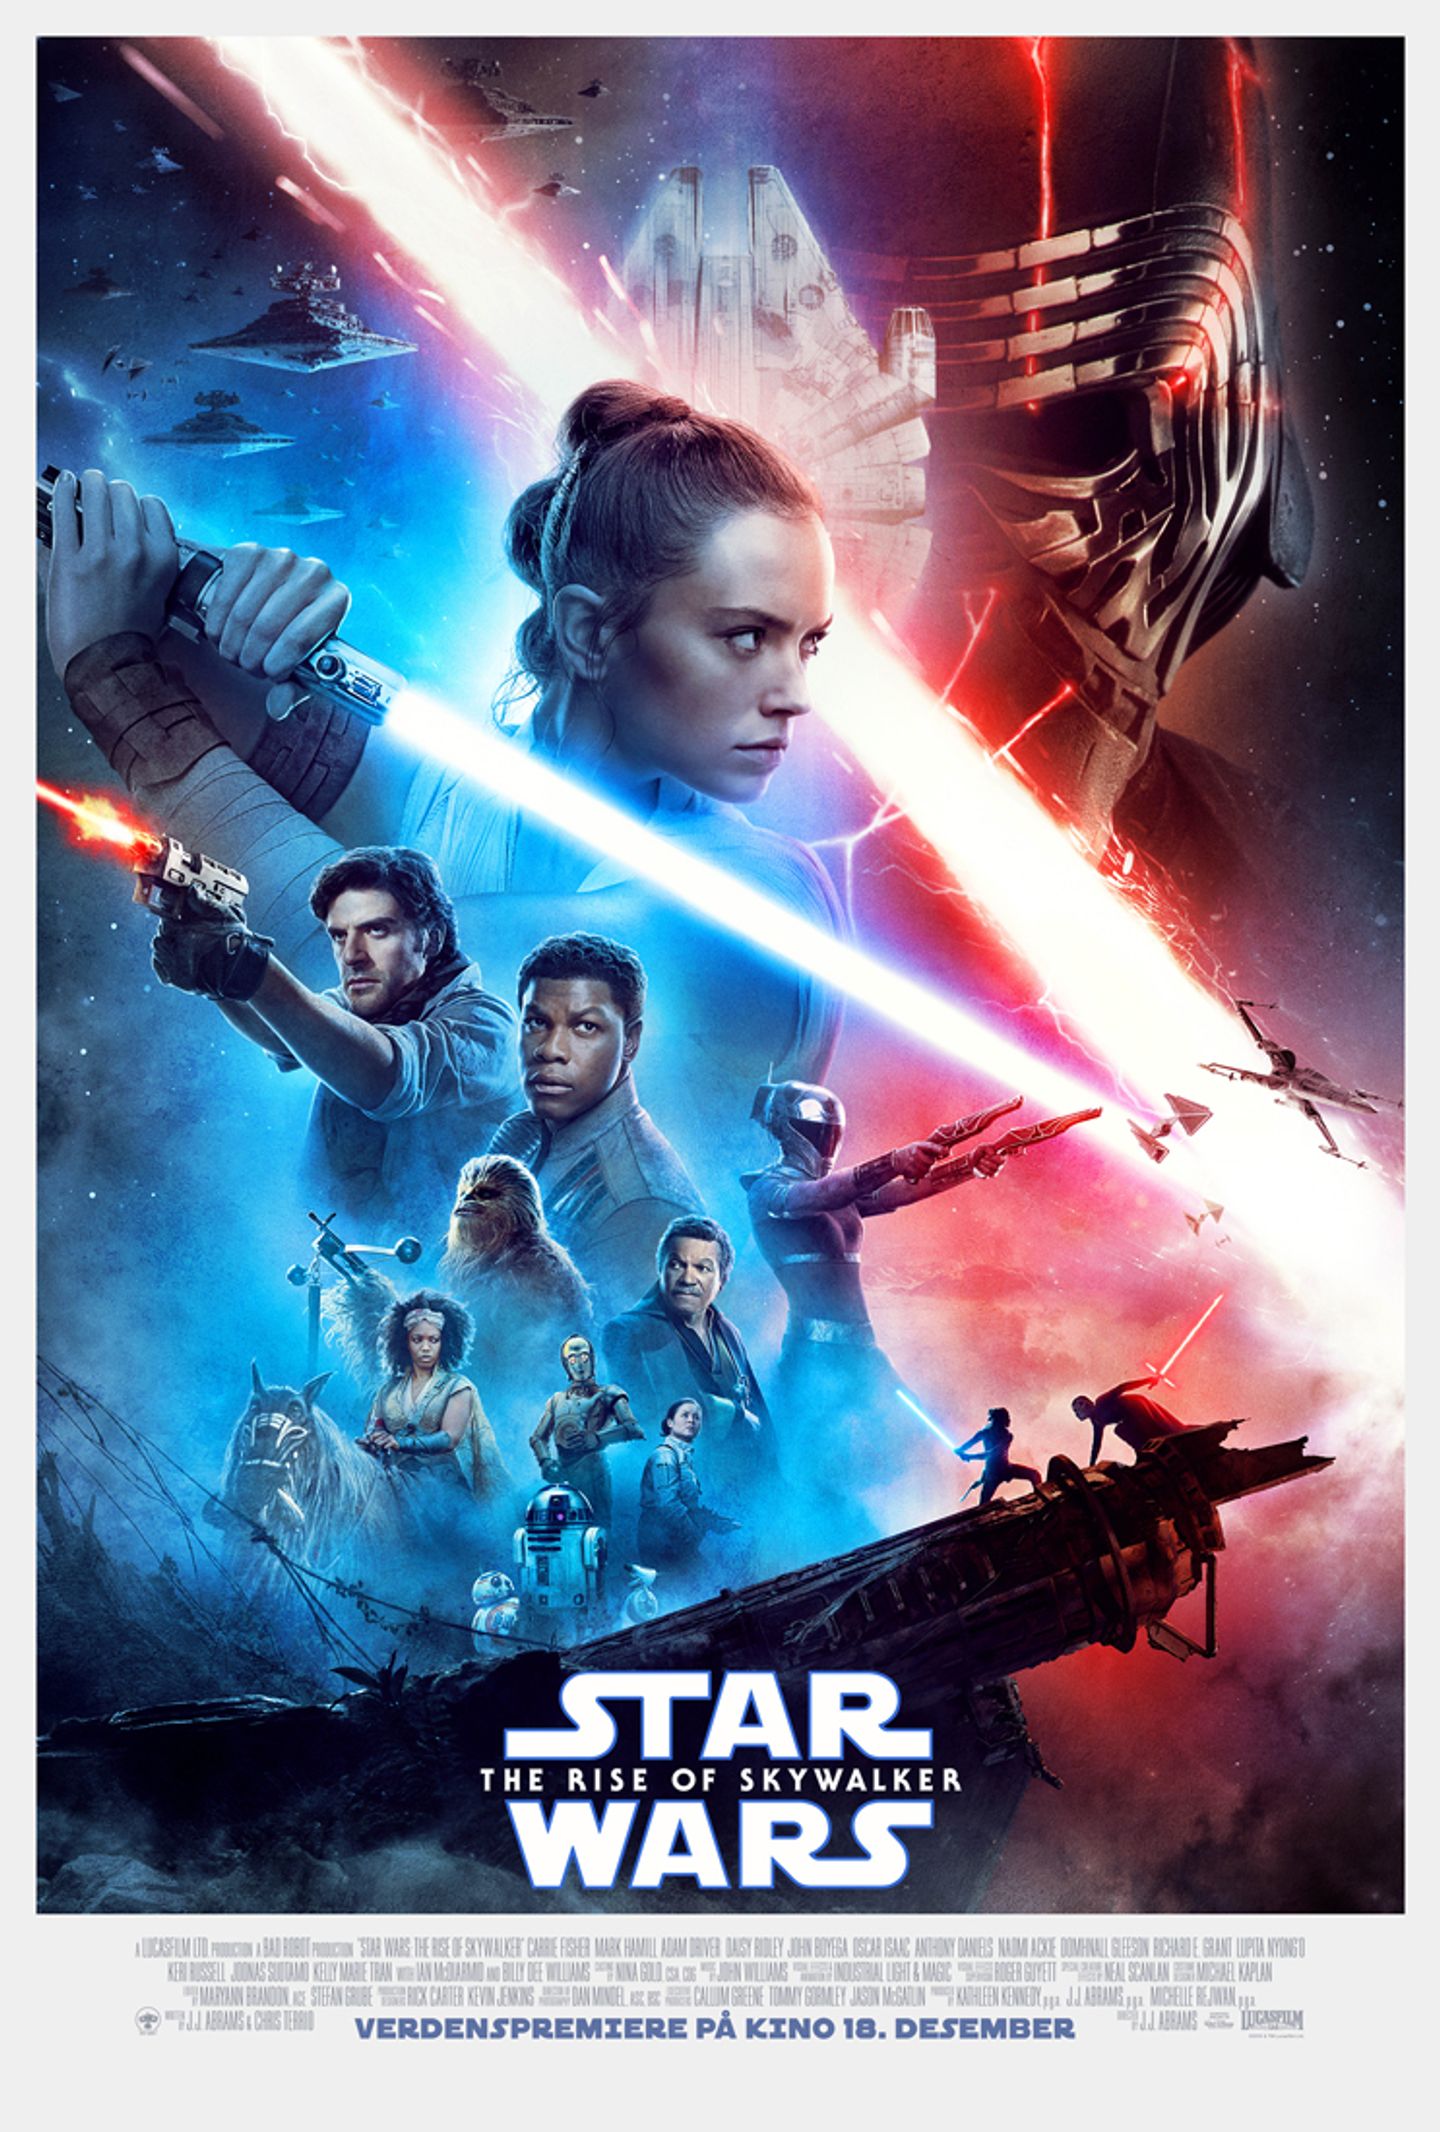 Plakat for 'Star Wars: The Rise of Skywalker'